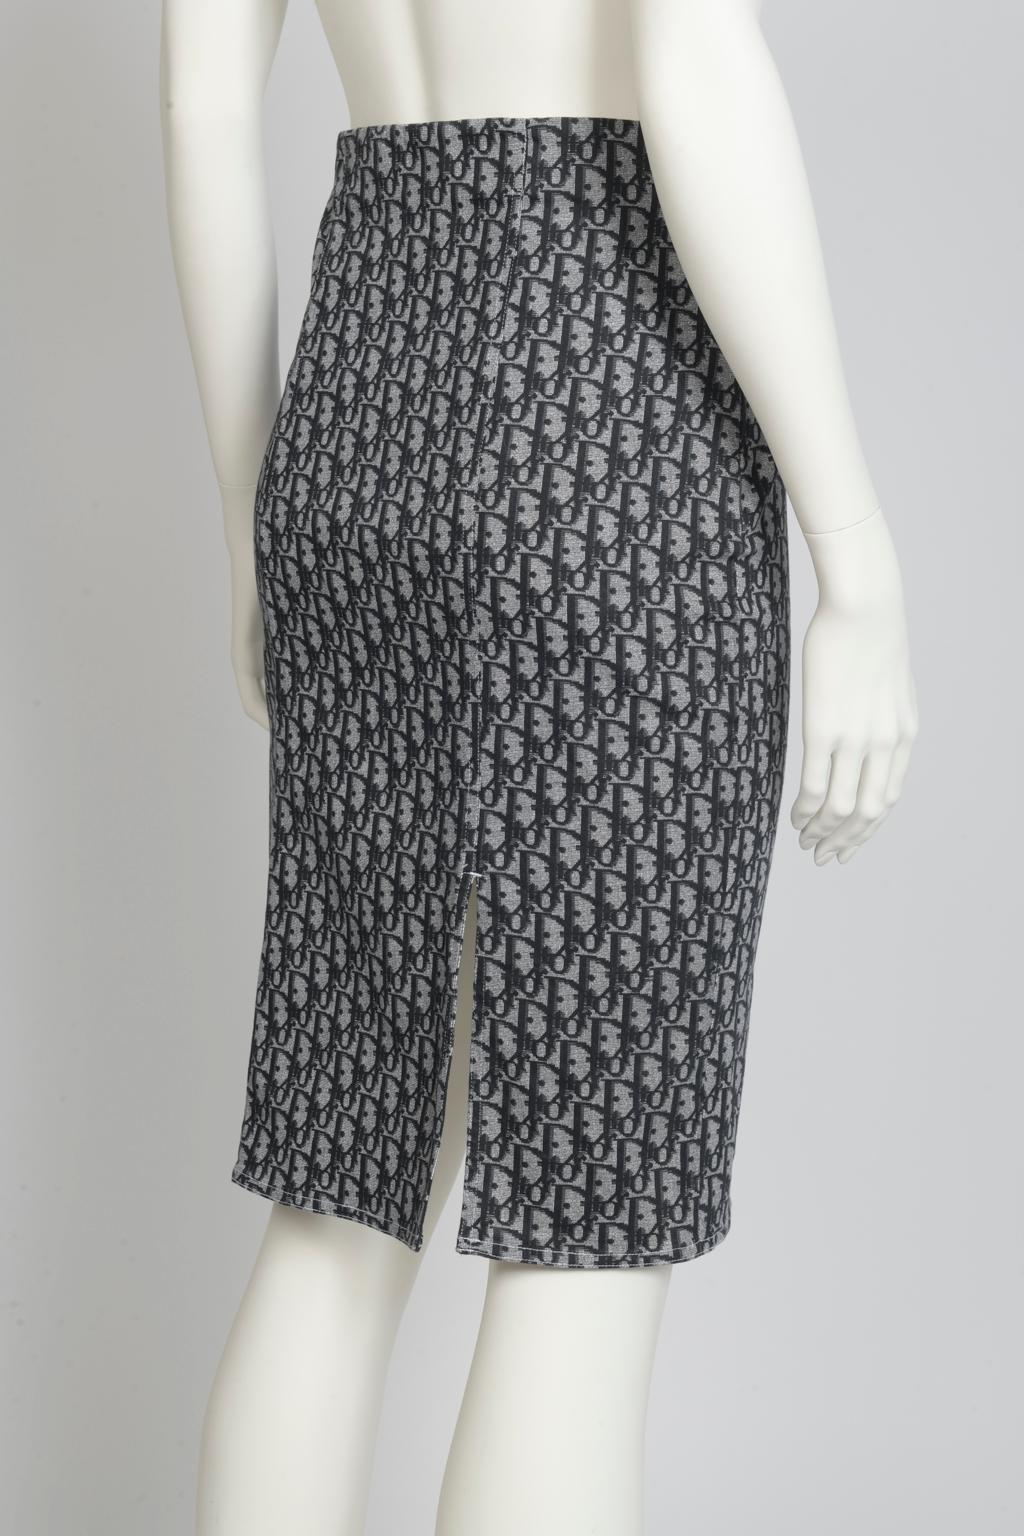 Gray Christian Dior By John Galliano Dior Oblique Pencil Skirt